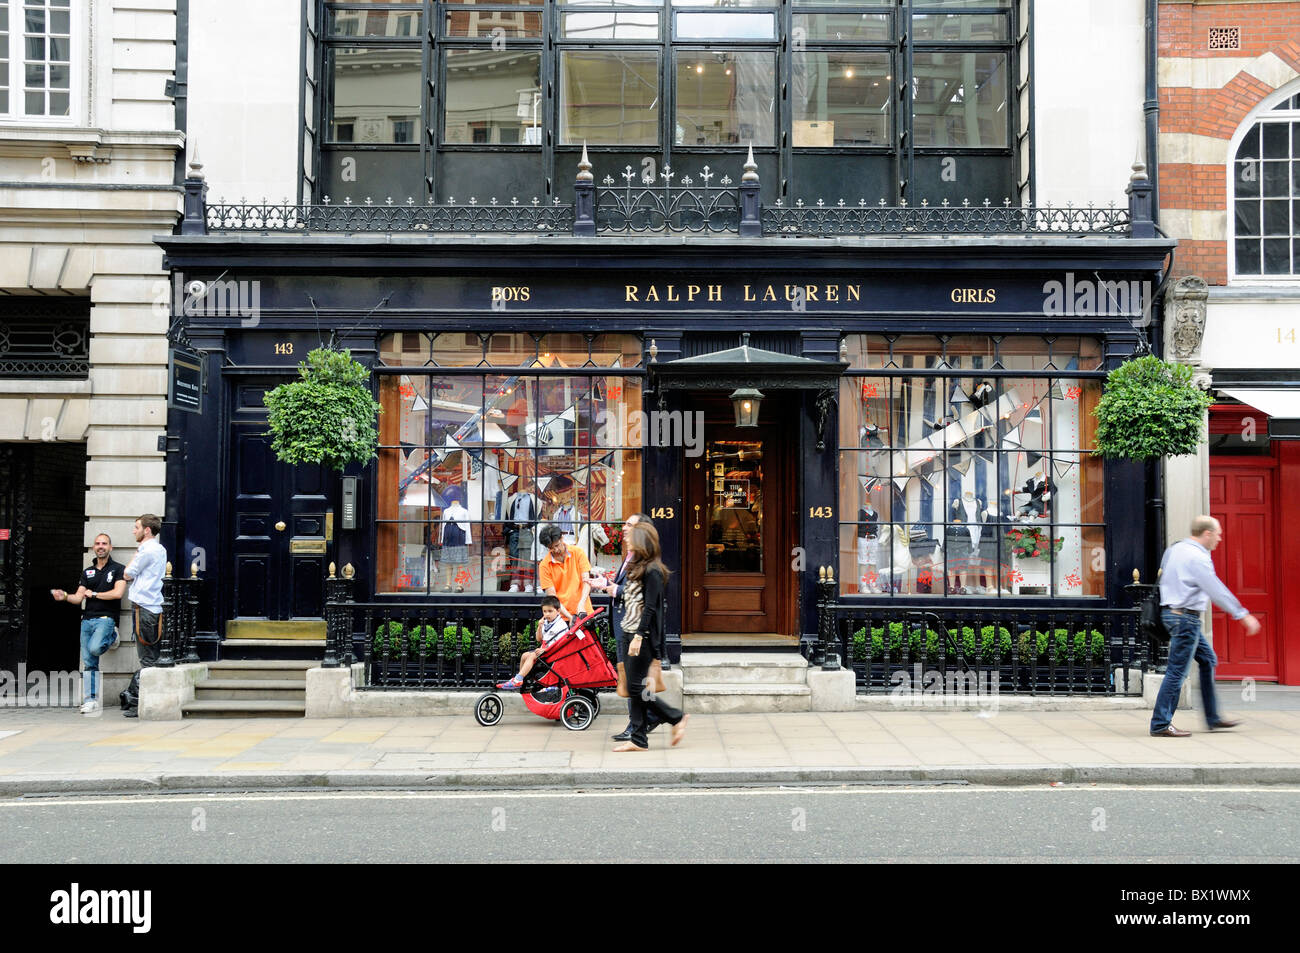 Ralph Lauren Shop, New Bond Street, London England UK Banque D'Images